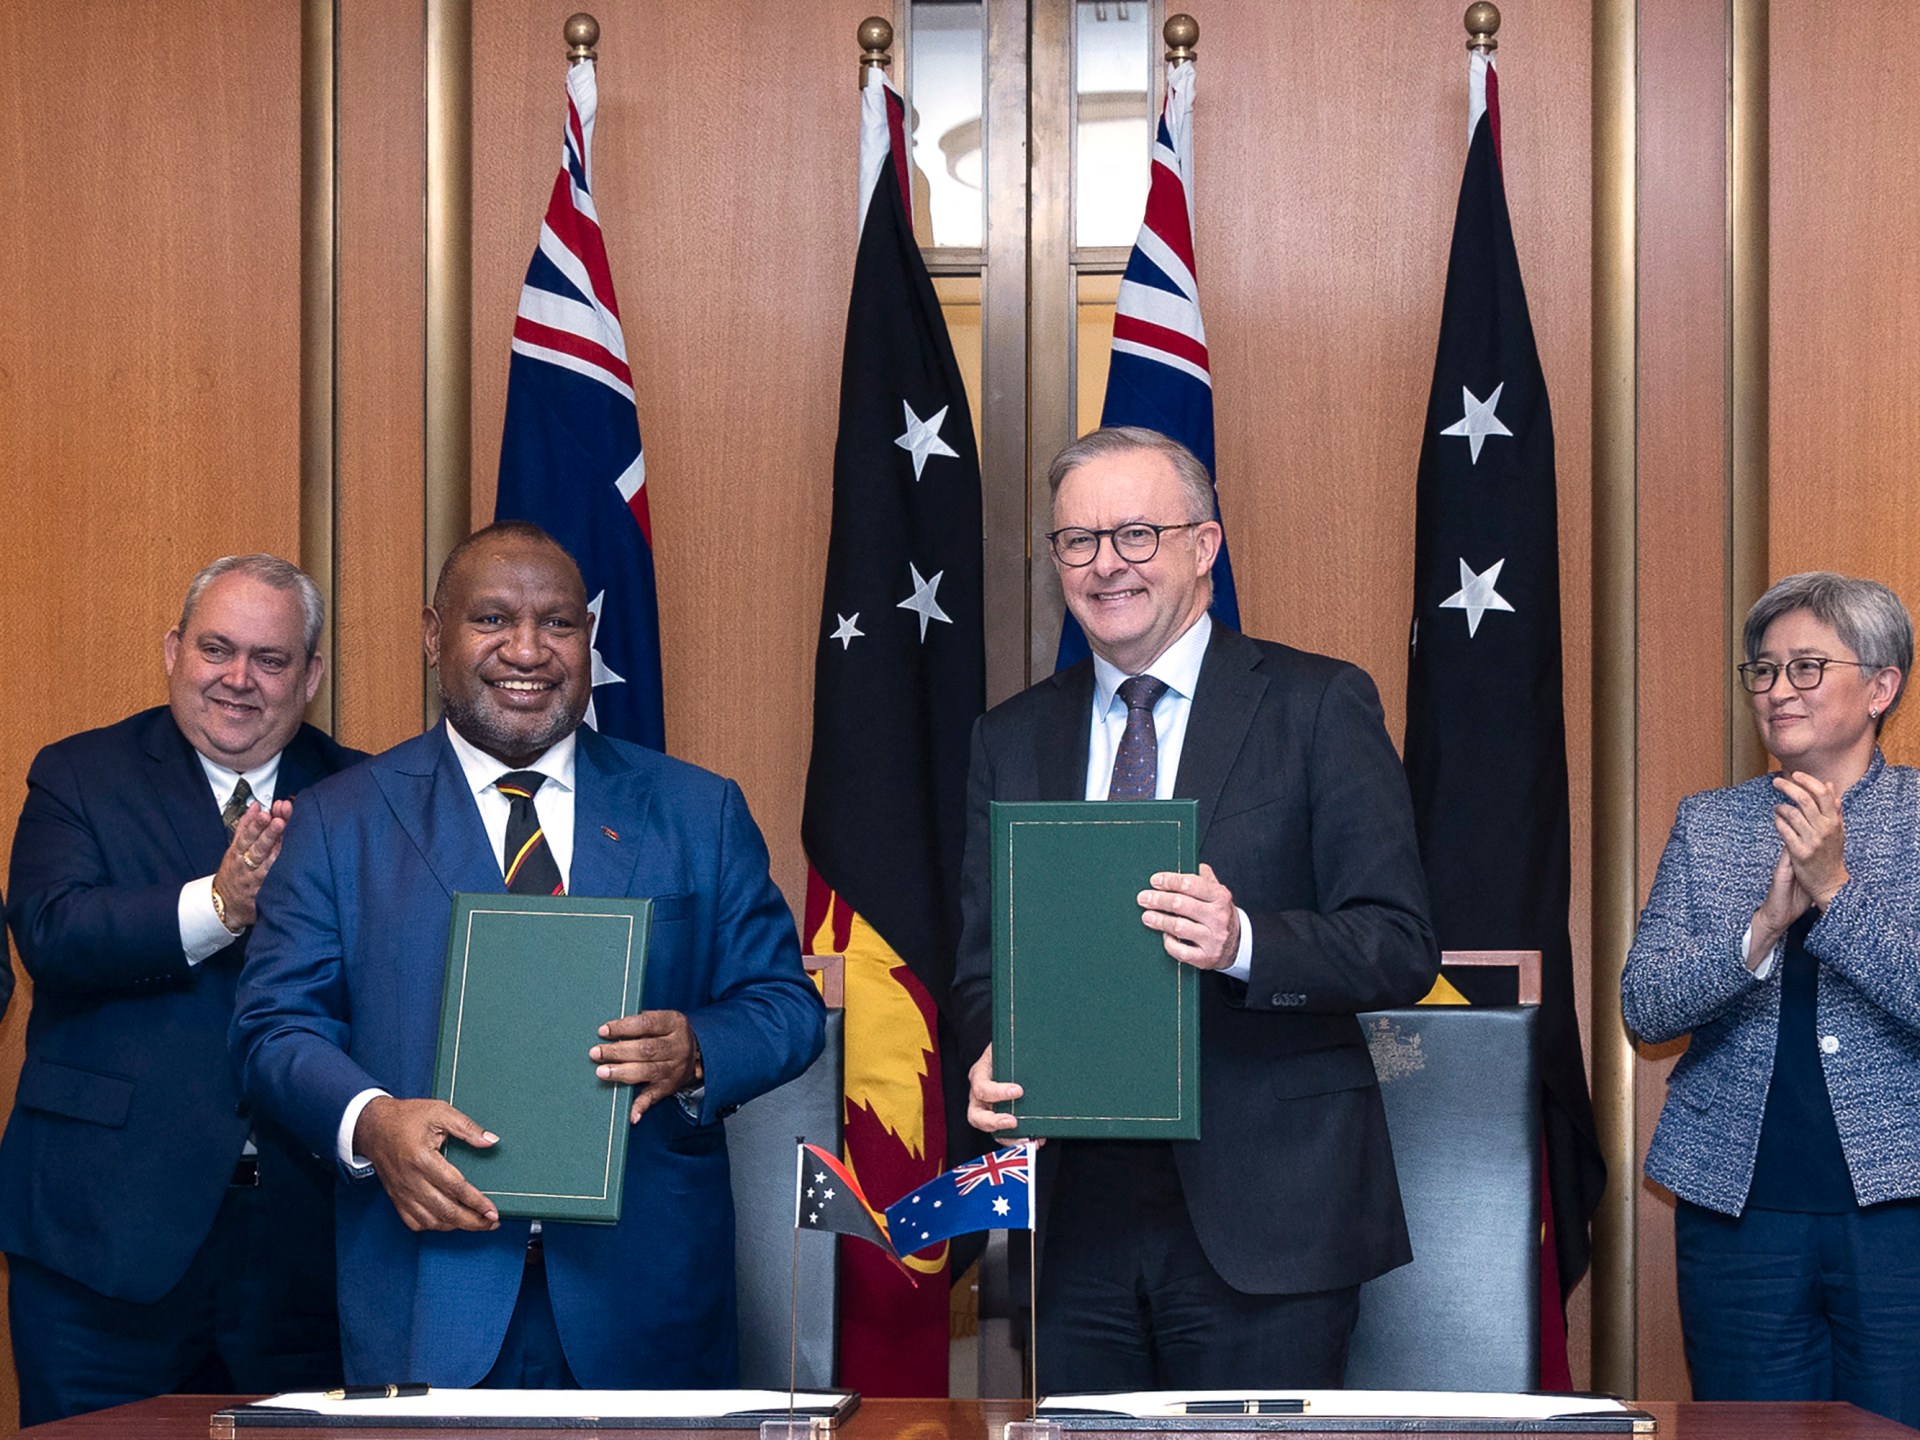 Australia and Papua New Guinea sign ‘historic’ security pact | Politics News #Australia #Papua #Guinea #sign #historic #security #pact #Politics #News